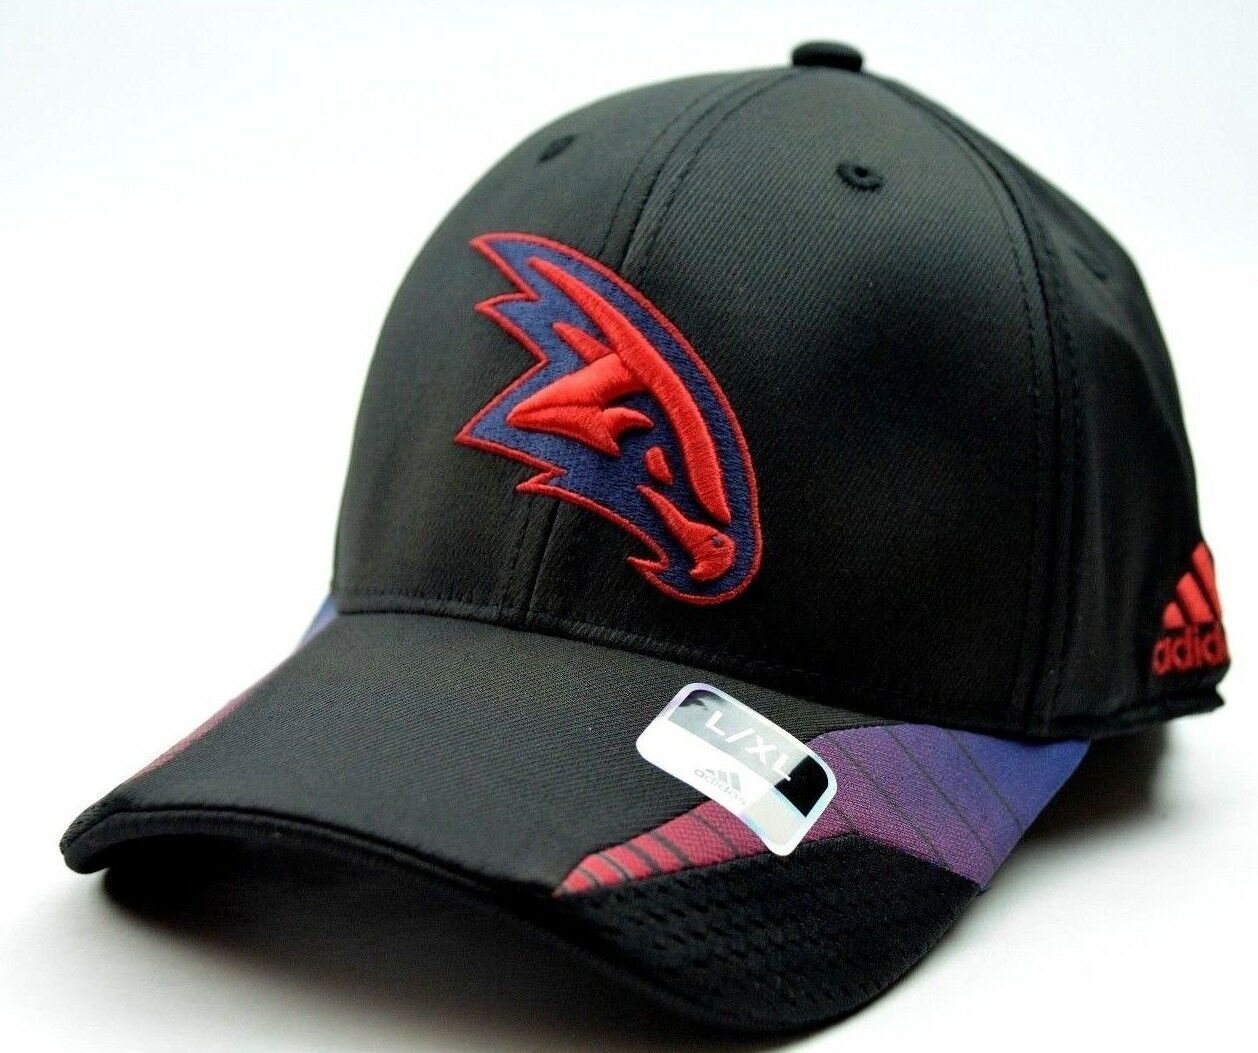 Primary image for Atlanta Hawks Adidas NBA Basketball Vibe Stretch Fit Cap Hat SM/MED & LG/XL